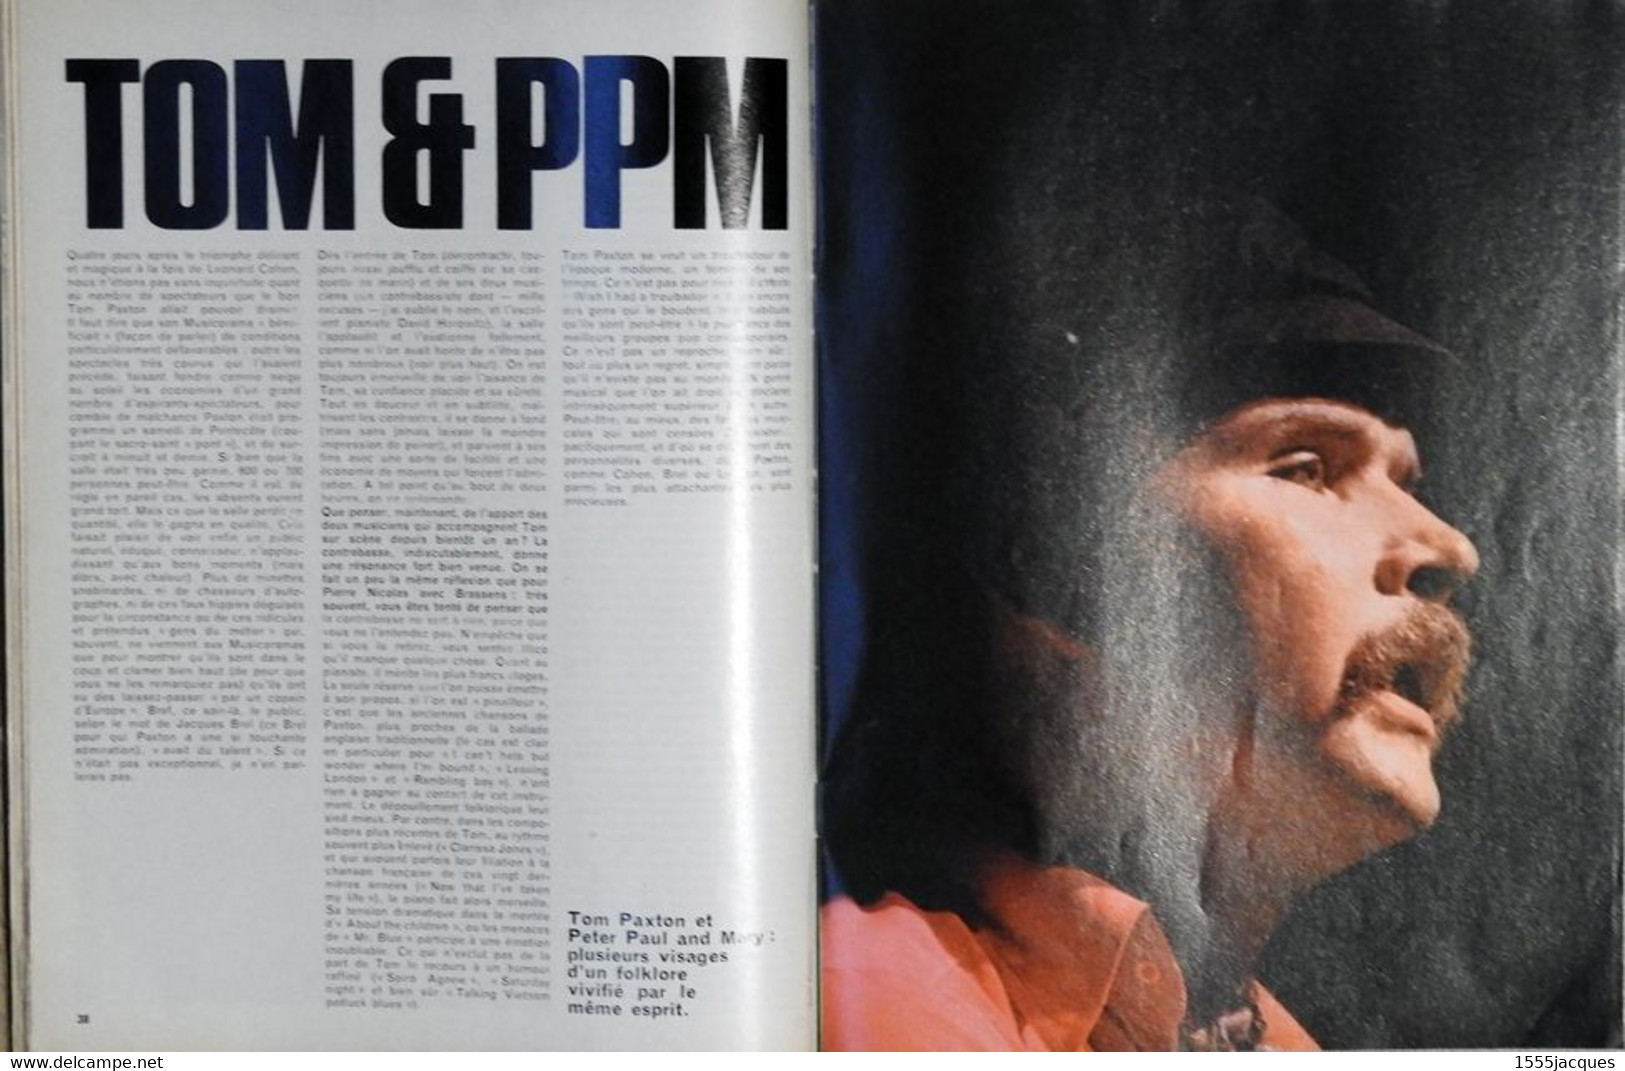 MAGAZINE ROCK & FOLK N° 42 07-1970 FRANK ZAPPA ERIC CLAPTON TOM PAXTON WEST POP 3 JOHNNY KIDD MICHAEL WADLEIGH GOA - Musica